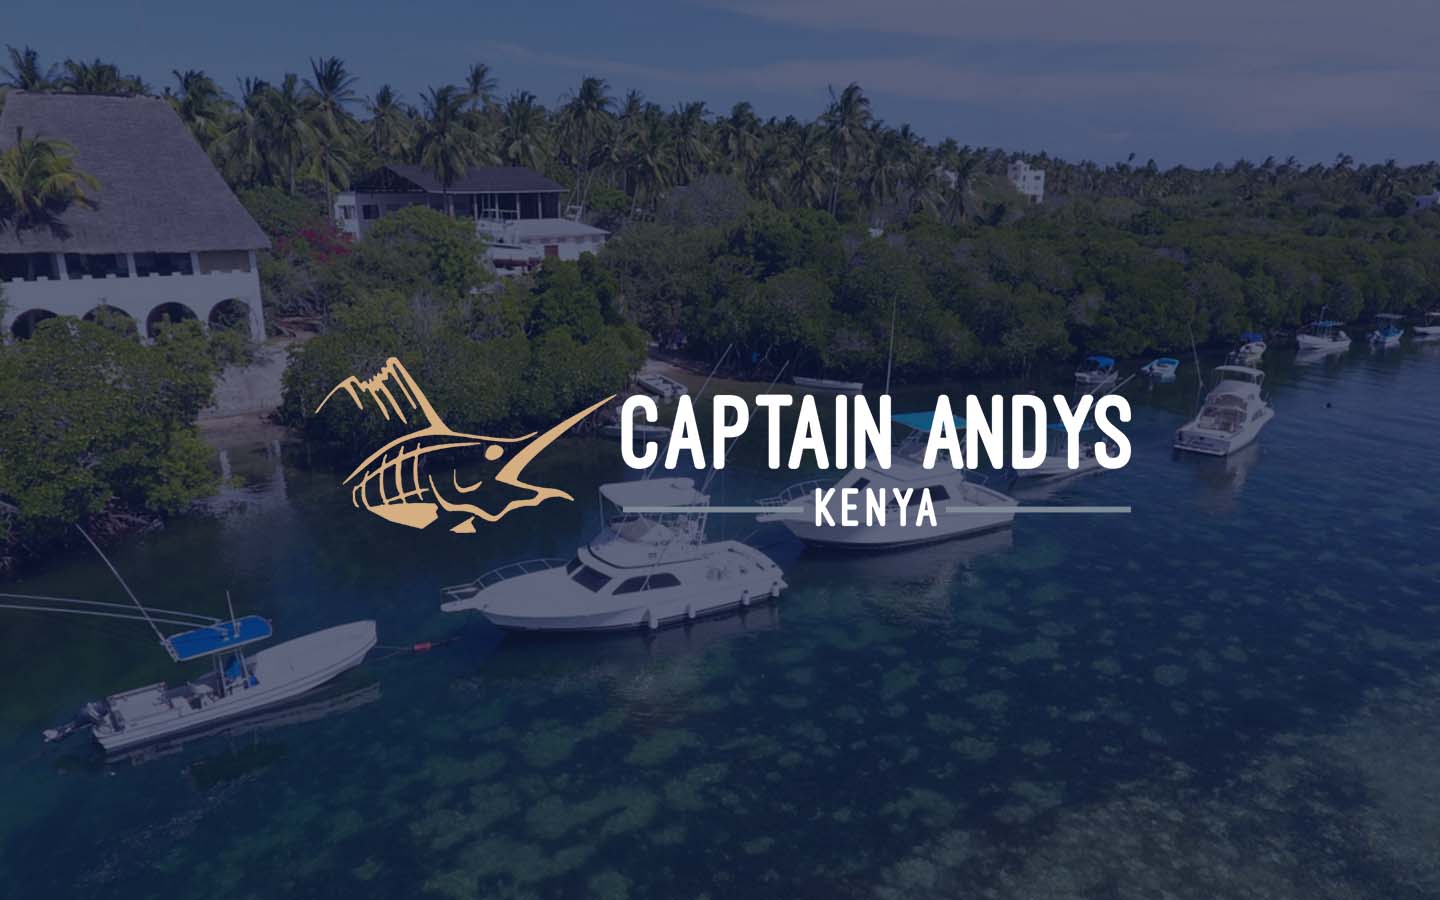 Marlin around as main tourney season starts - Captains Andys Kenya - captain andys kenya 6